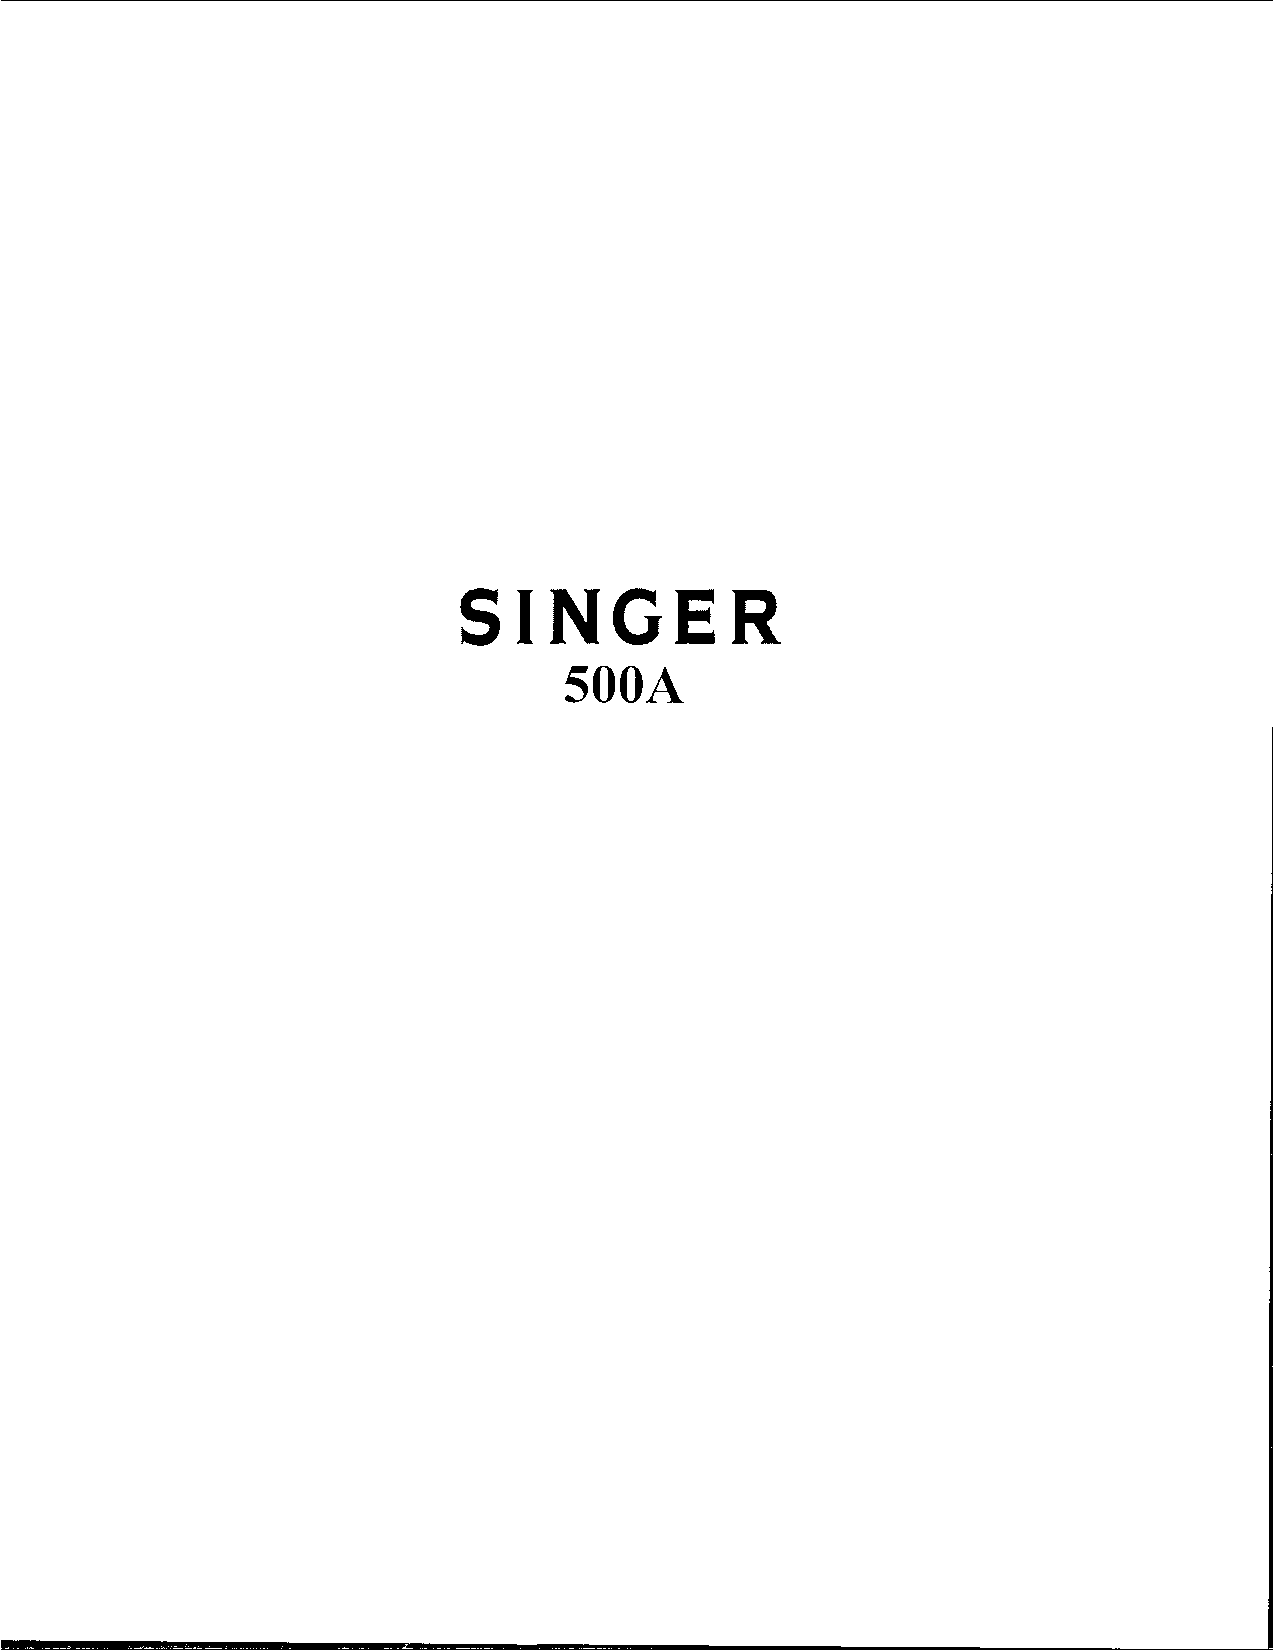 Singer 500a User Manual